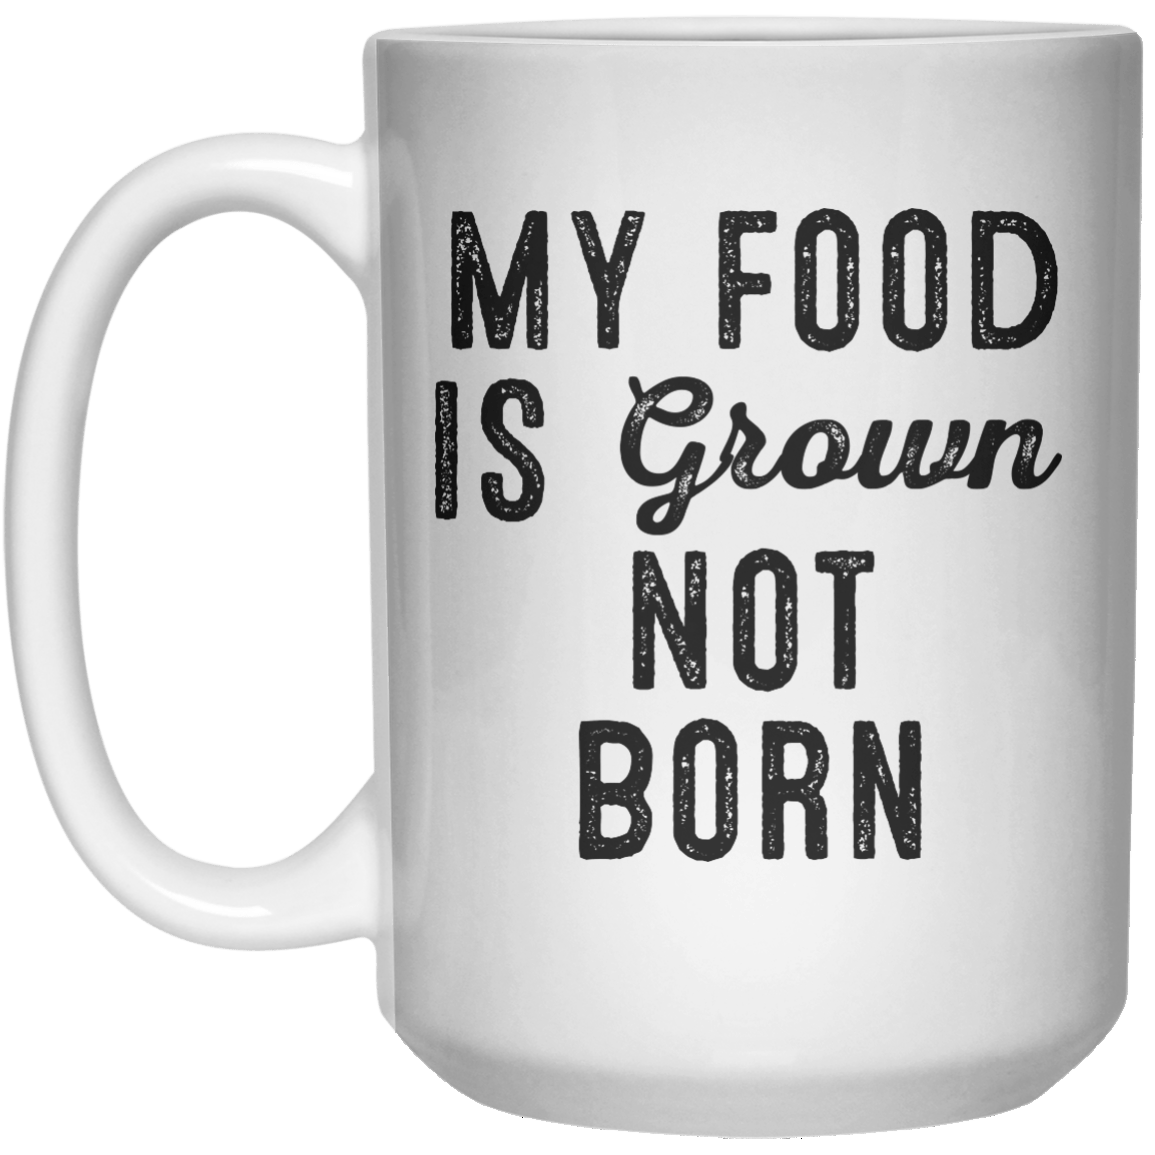 My Food Is Grown Not Born MUG  Mug - 15oz - Shirtoopia